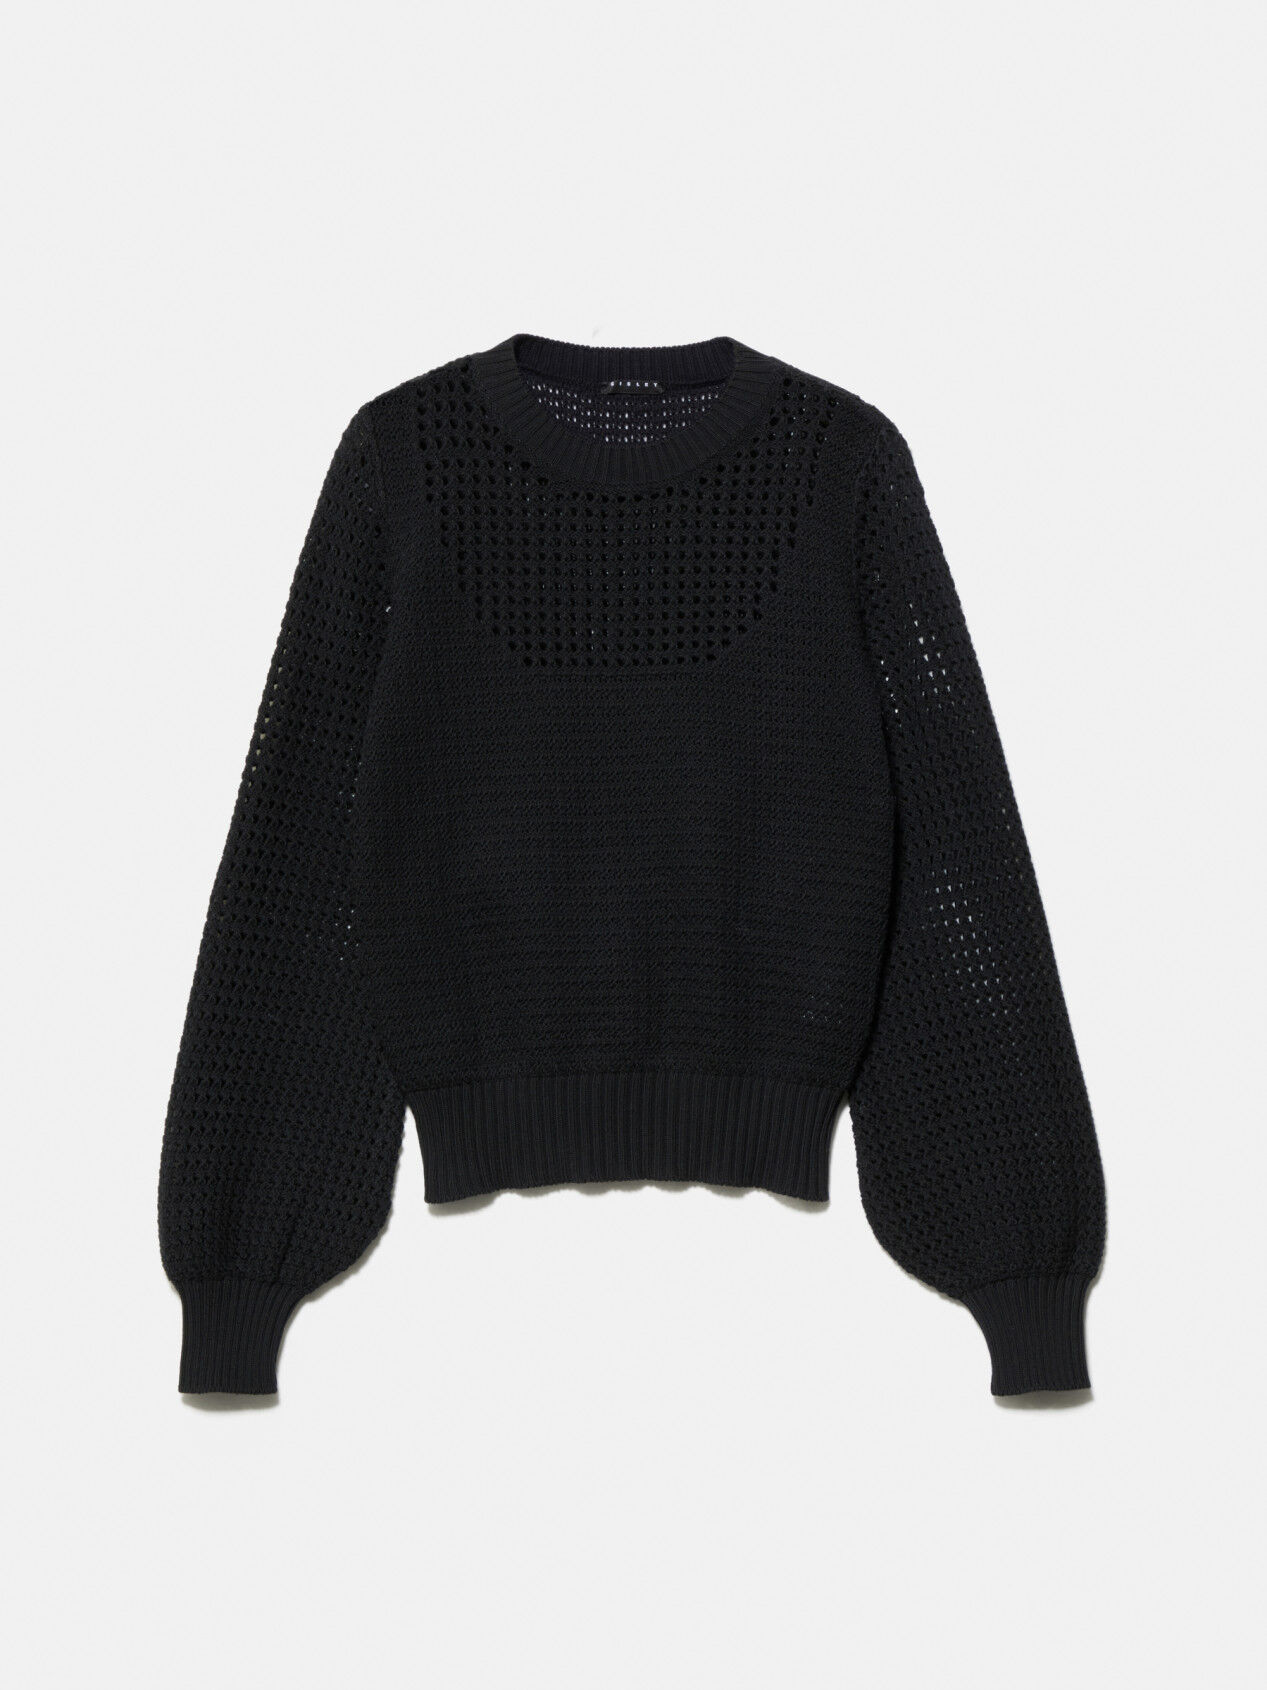 handle open knit tops.Blackレディース - ニット/セーター